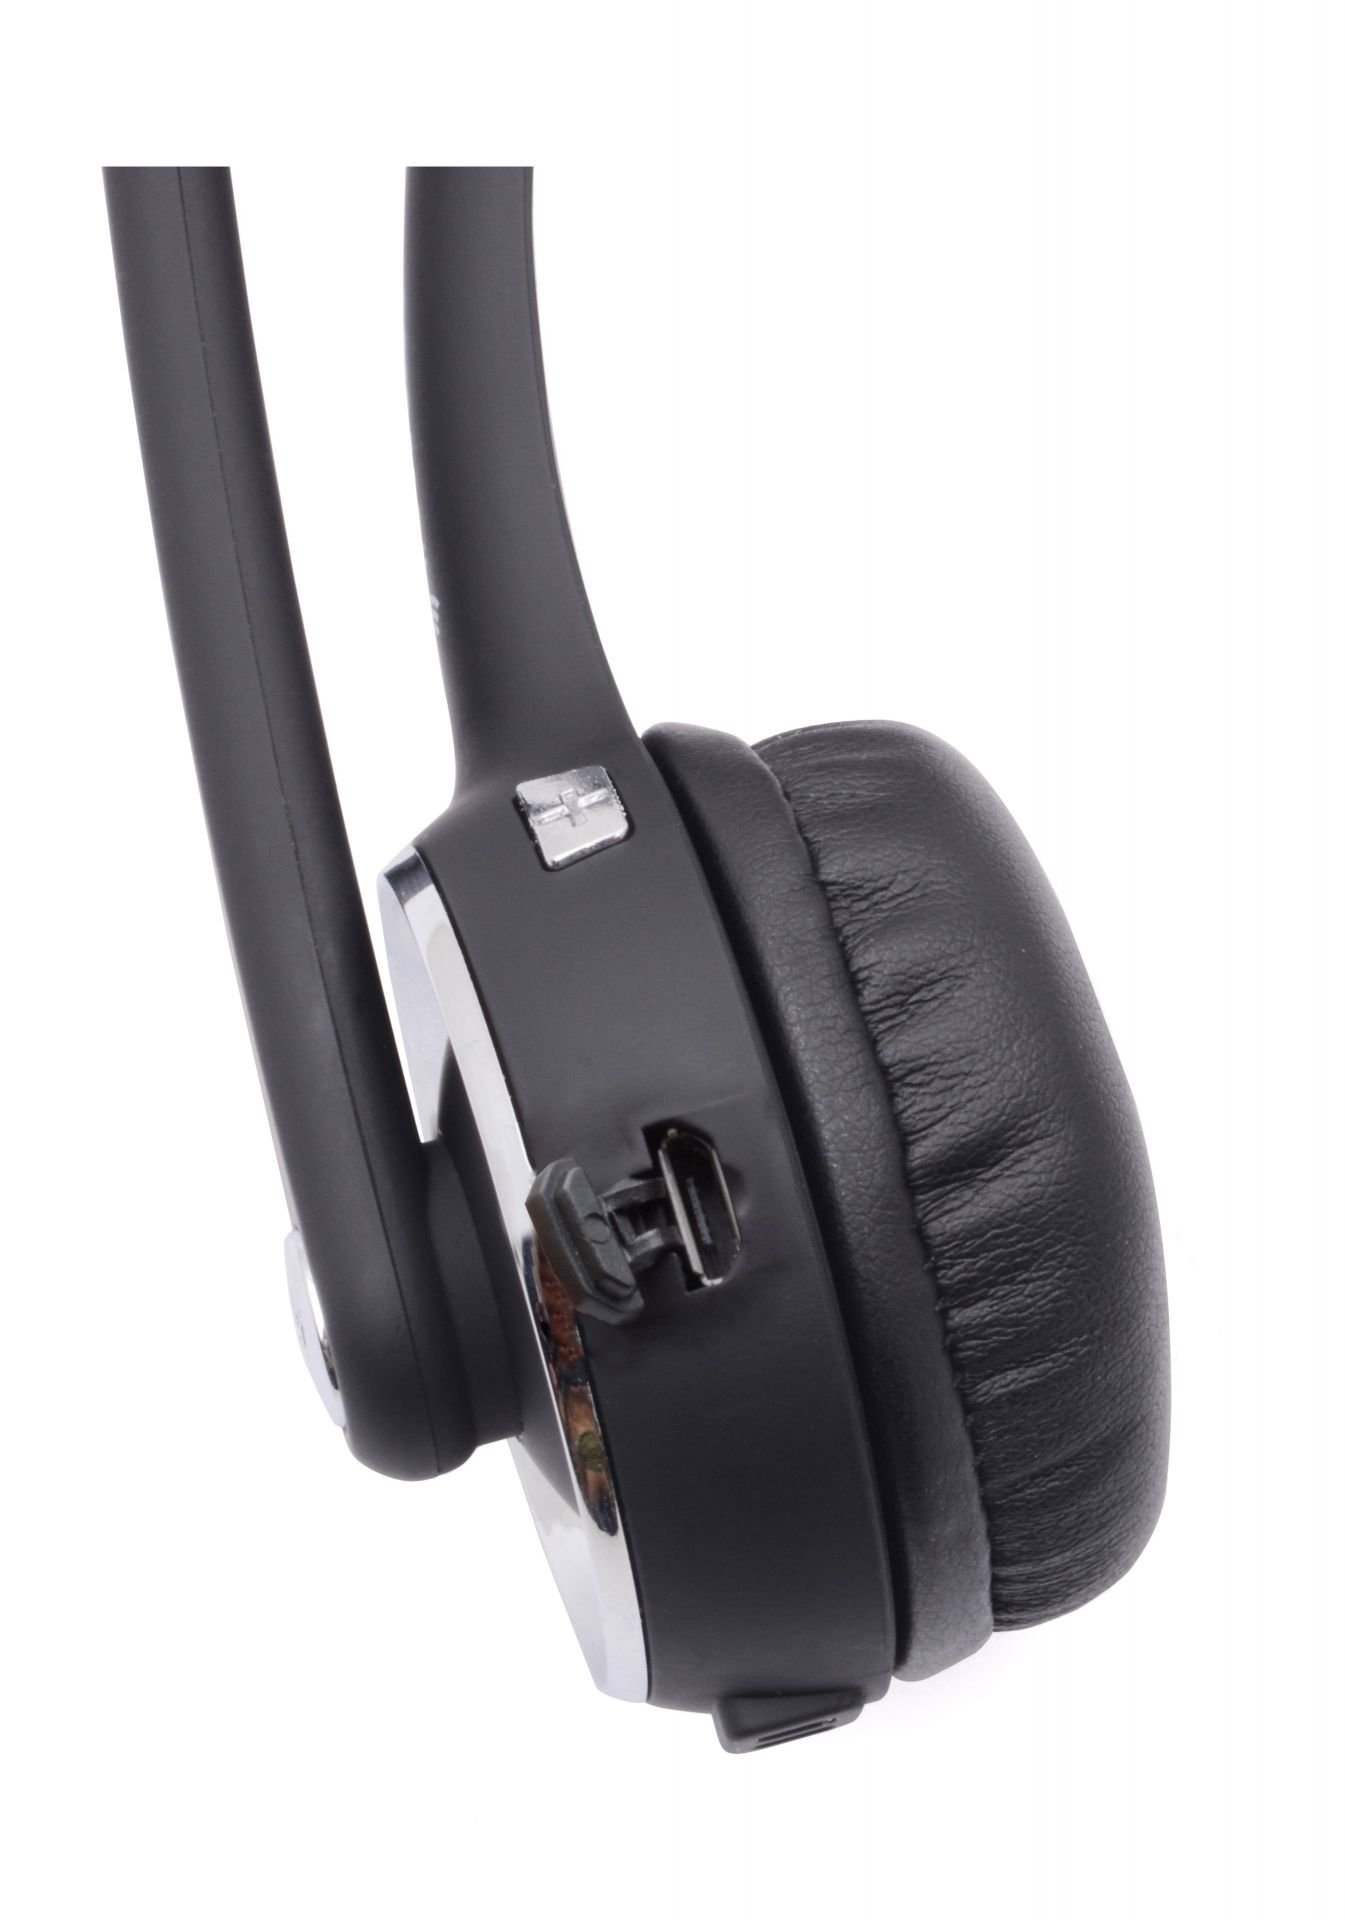 FREEVOICE Nimbus Bluetooth II Over-ear Headset Mono Schwarz NC